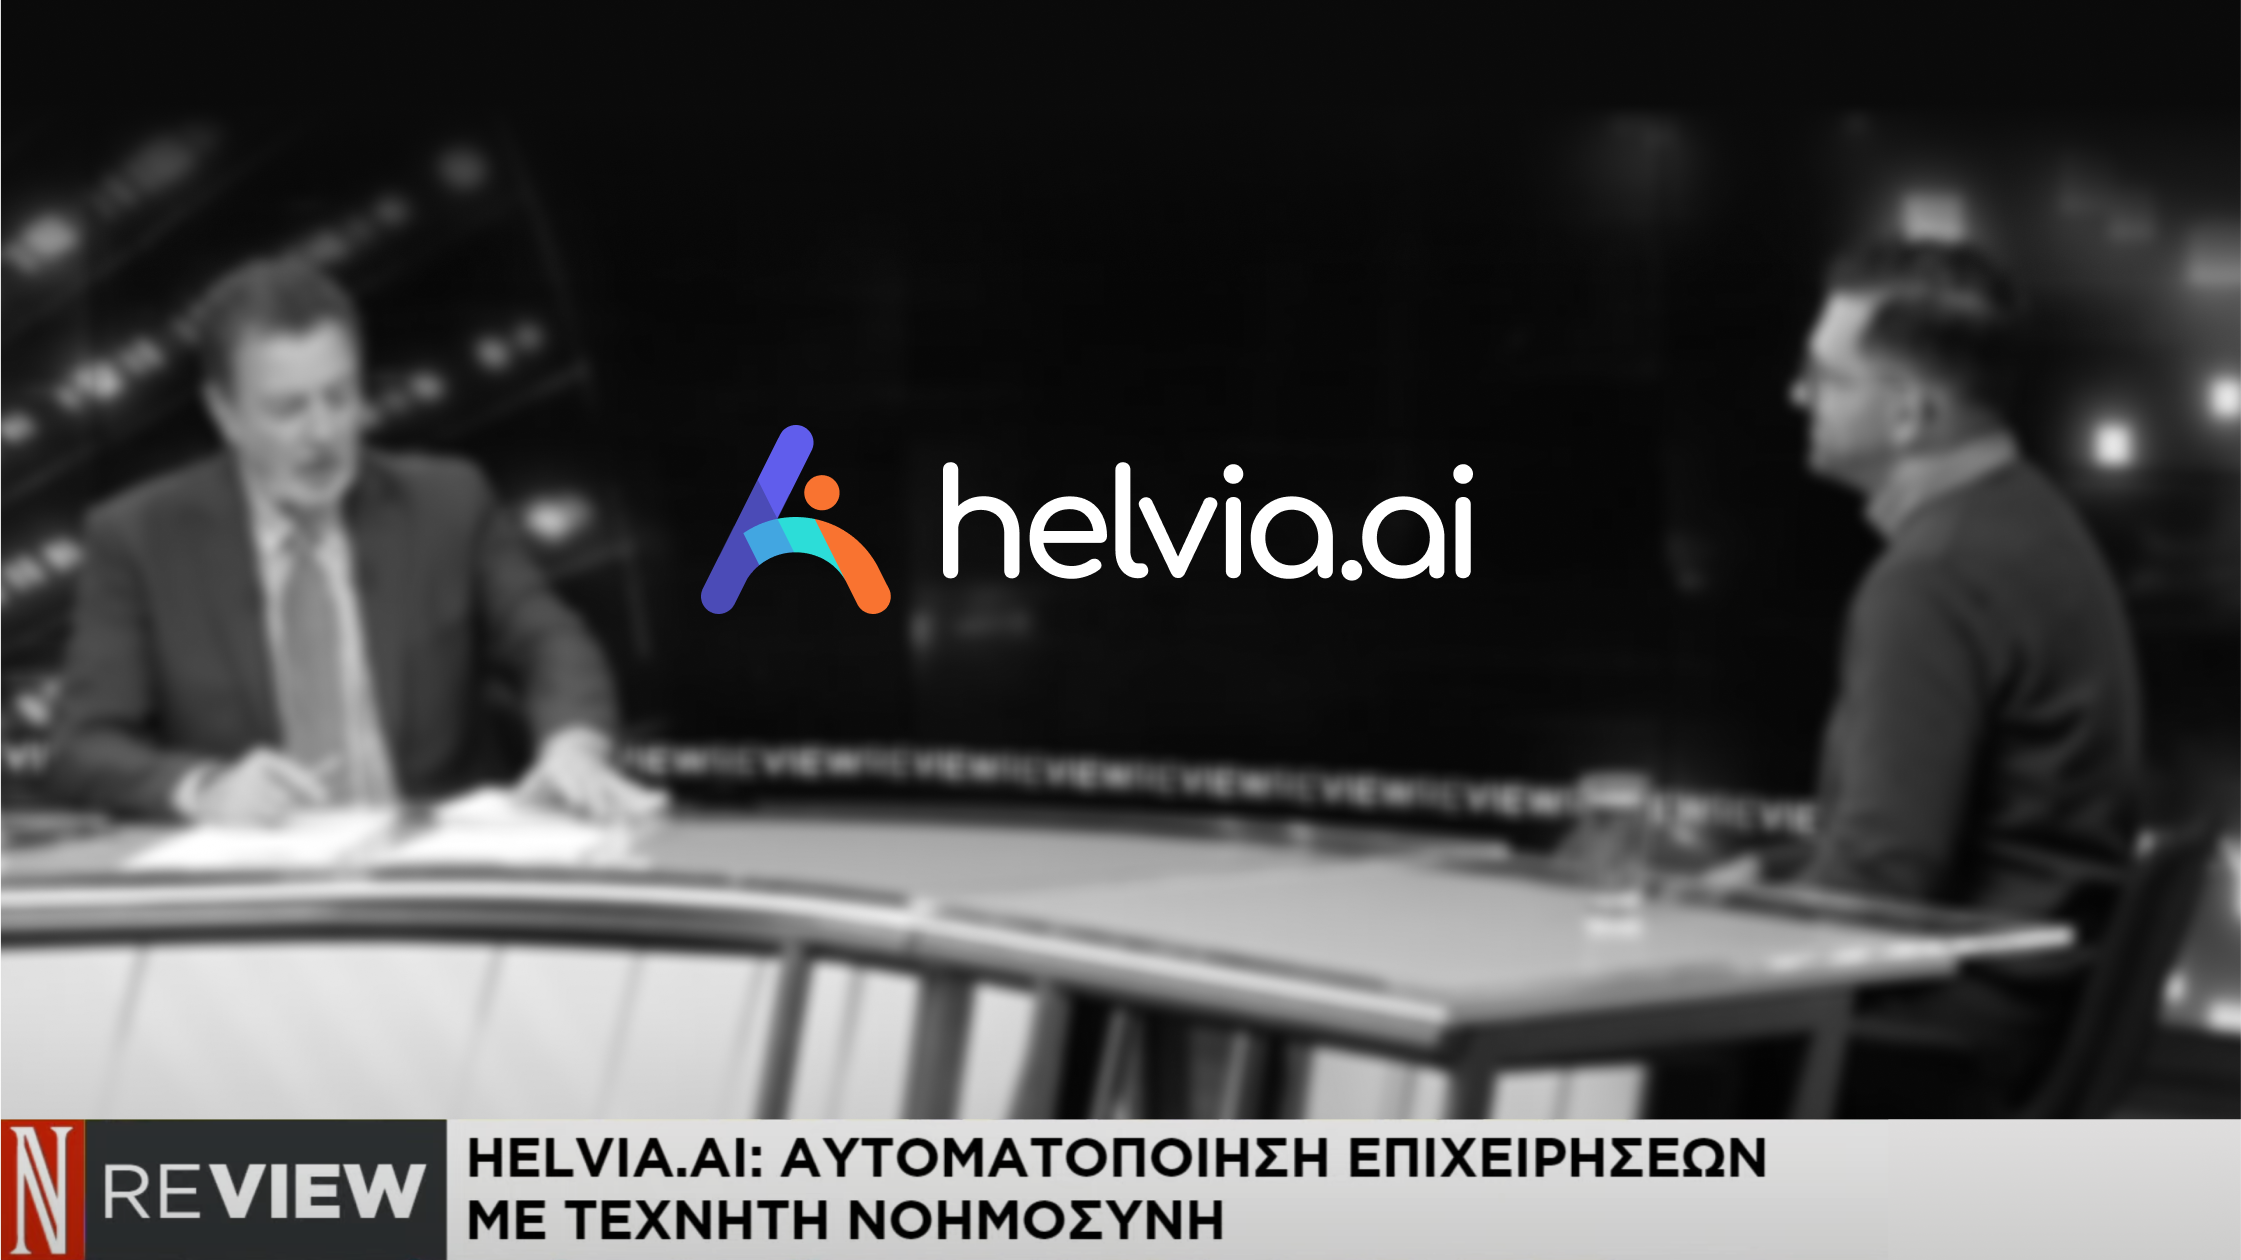 Helvia.ai on Naftemporiki TV